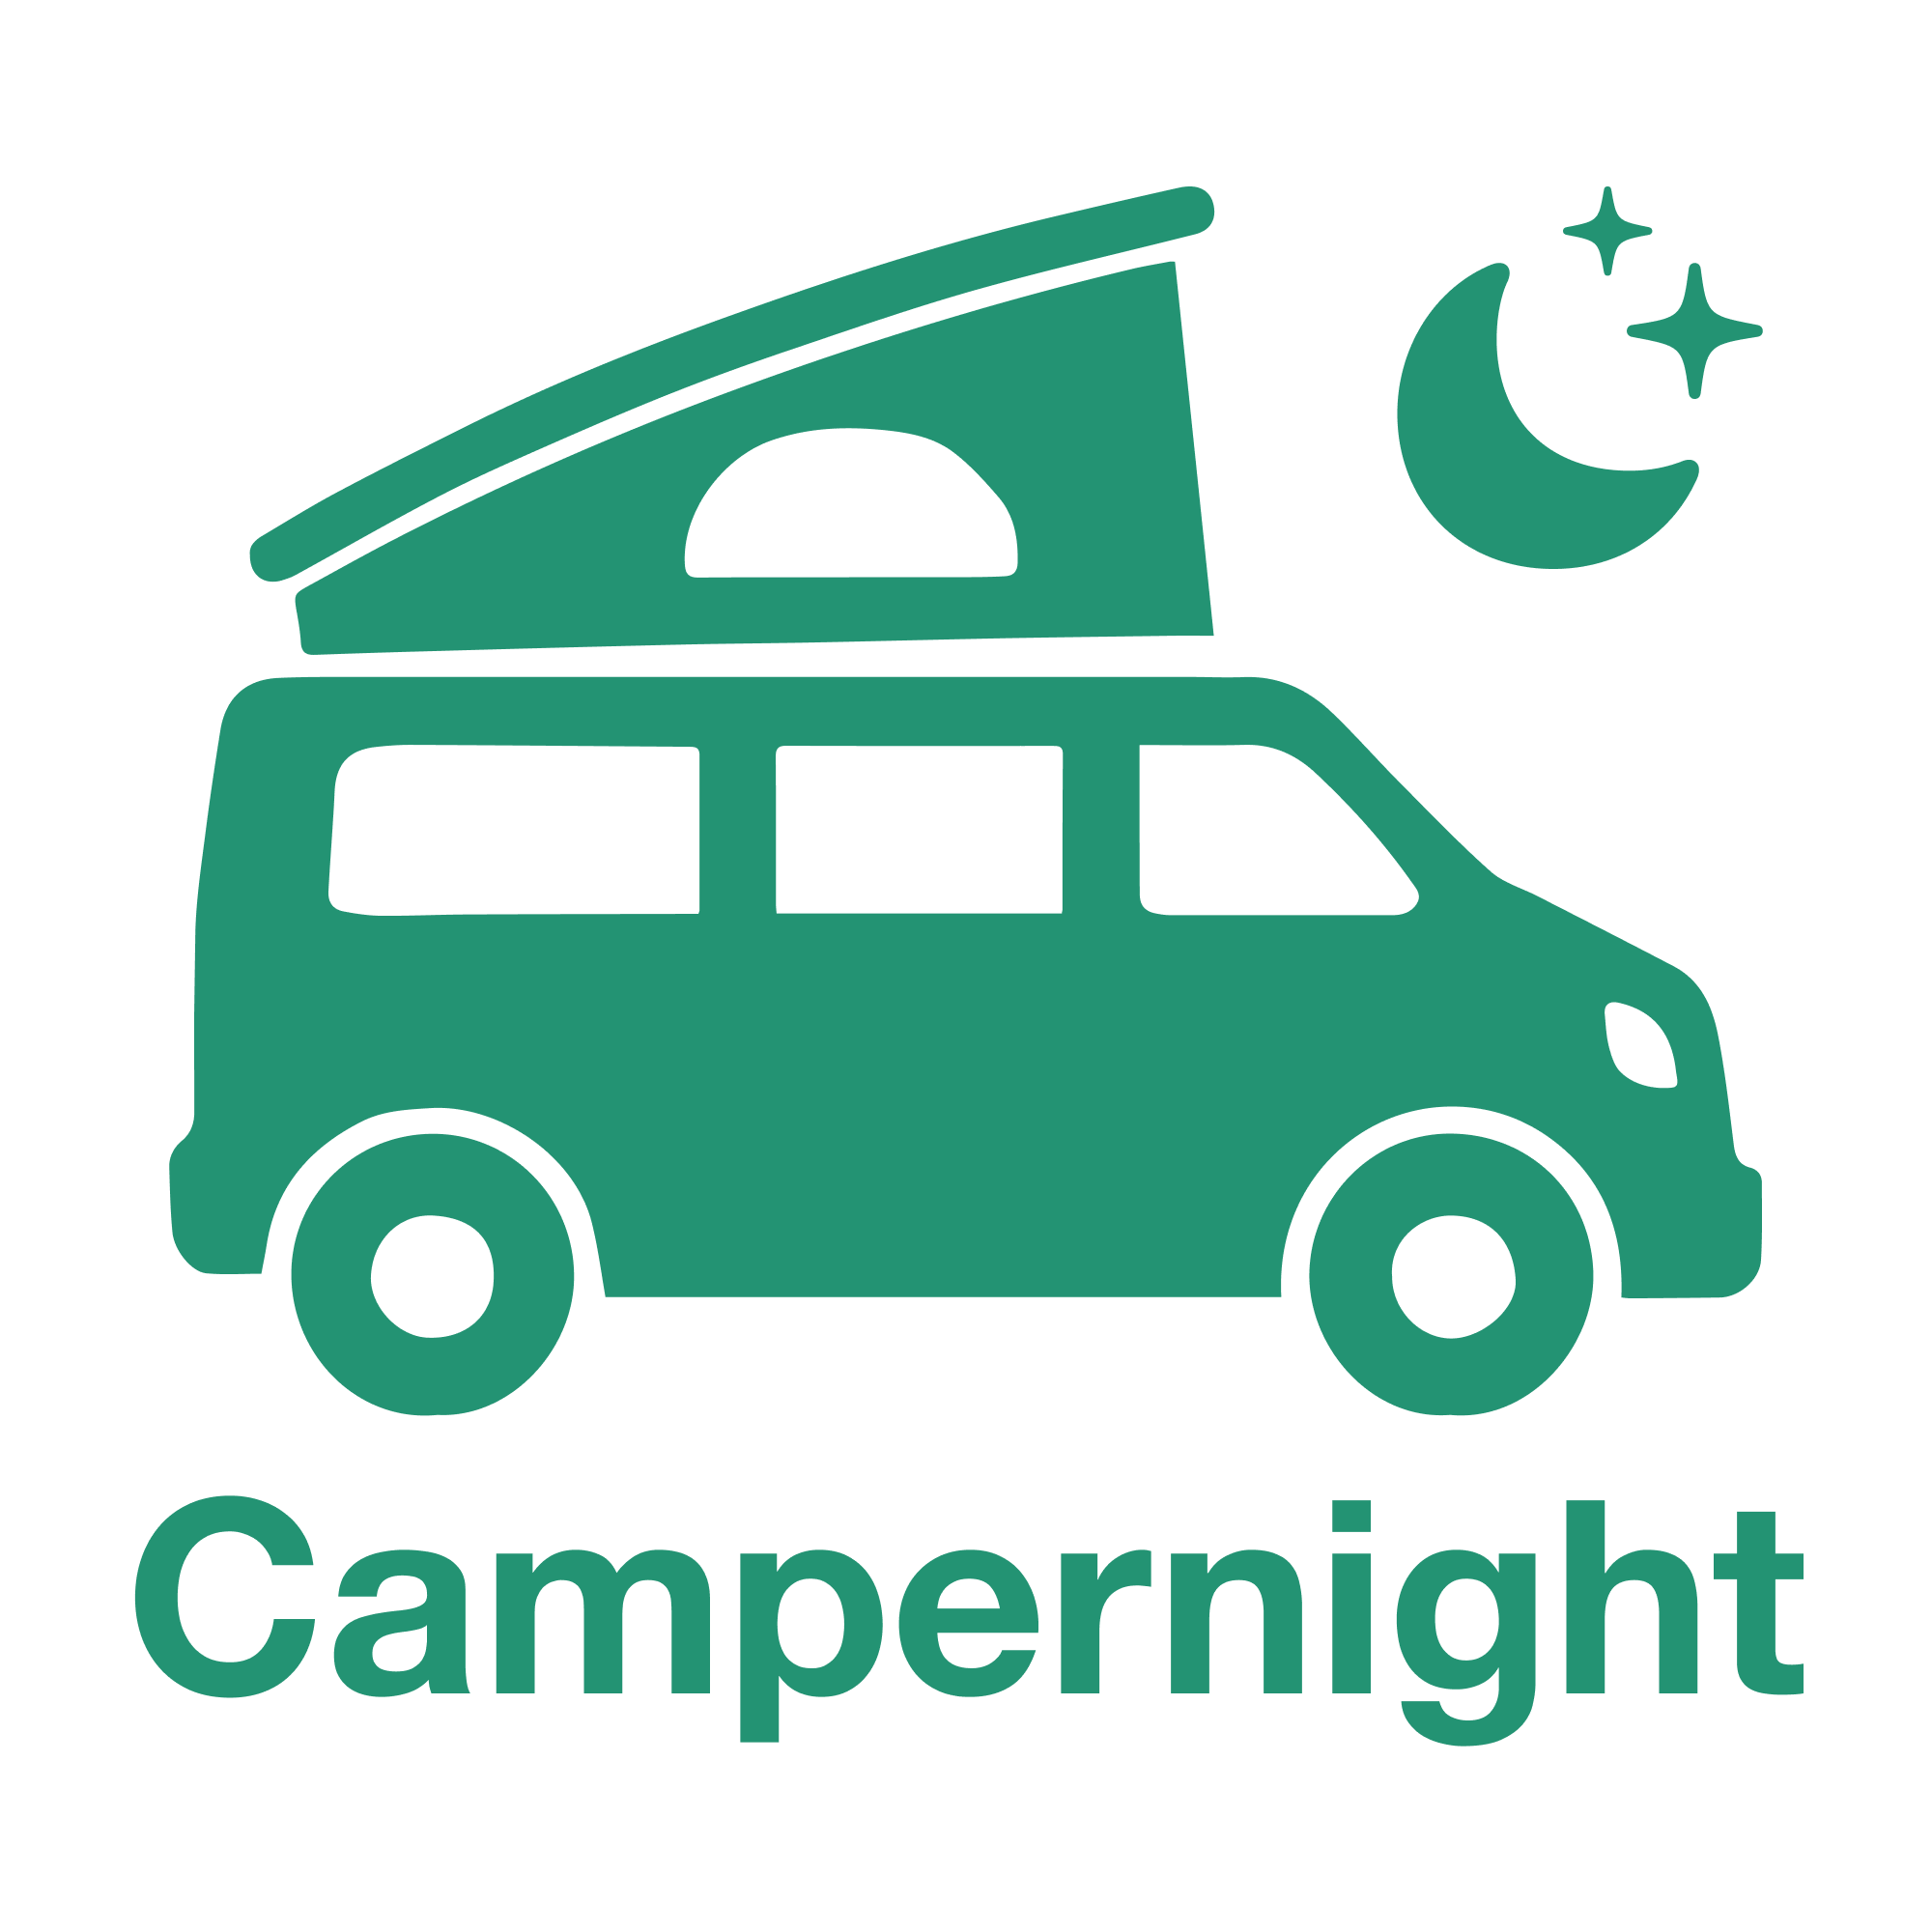 Campernight